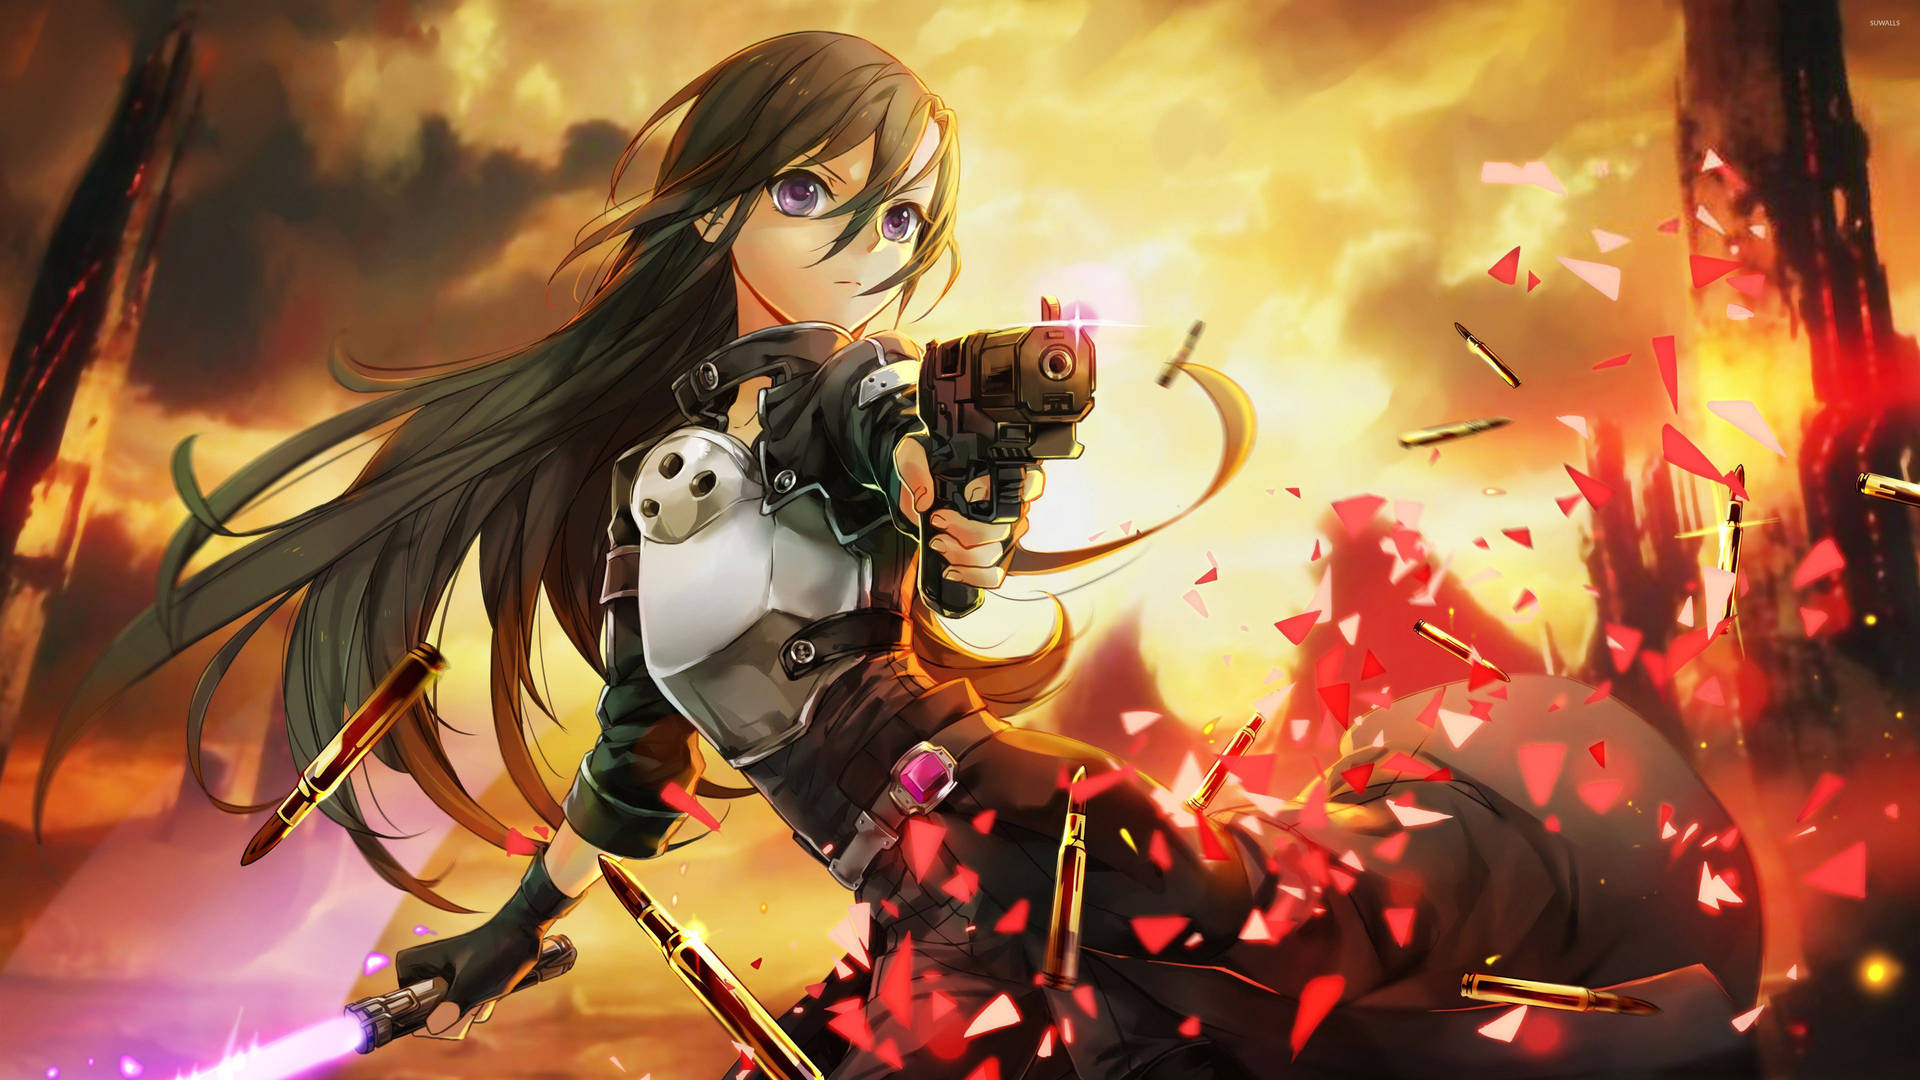 Kirito from Sword Art Online unleashes a barrage of bullets in battle. Wallpaper